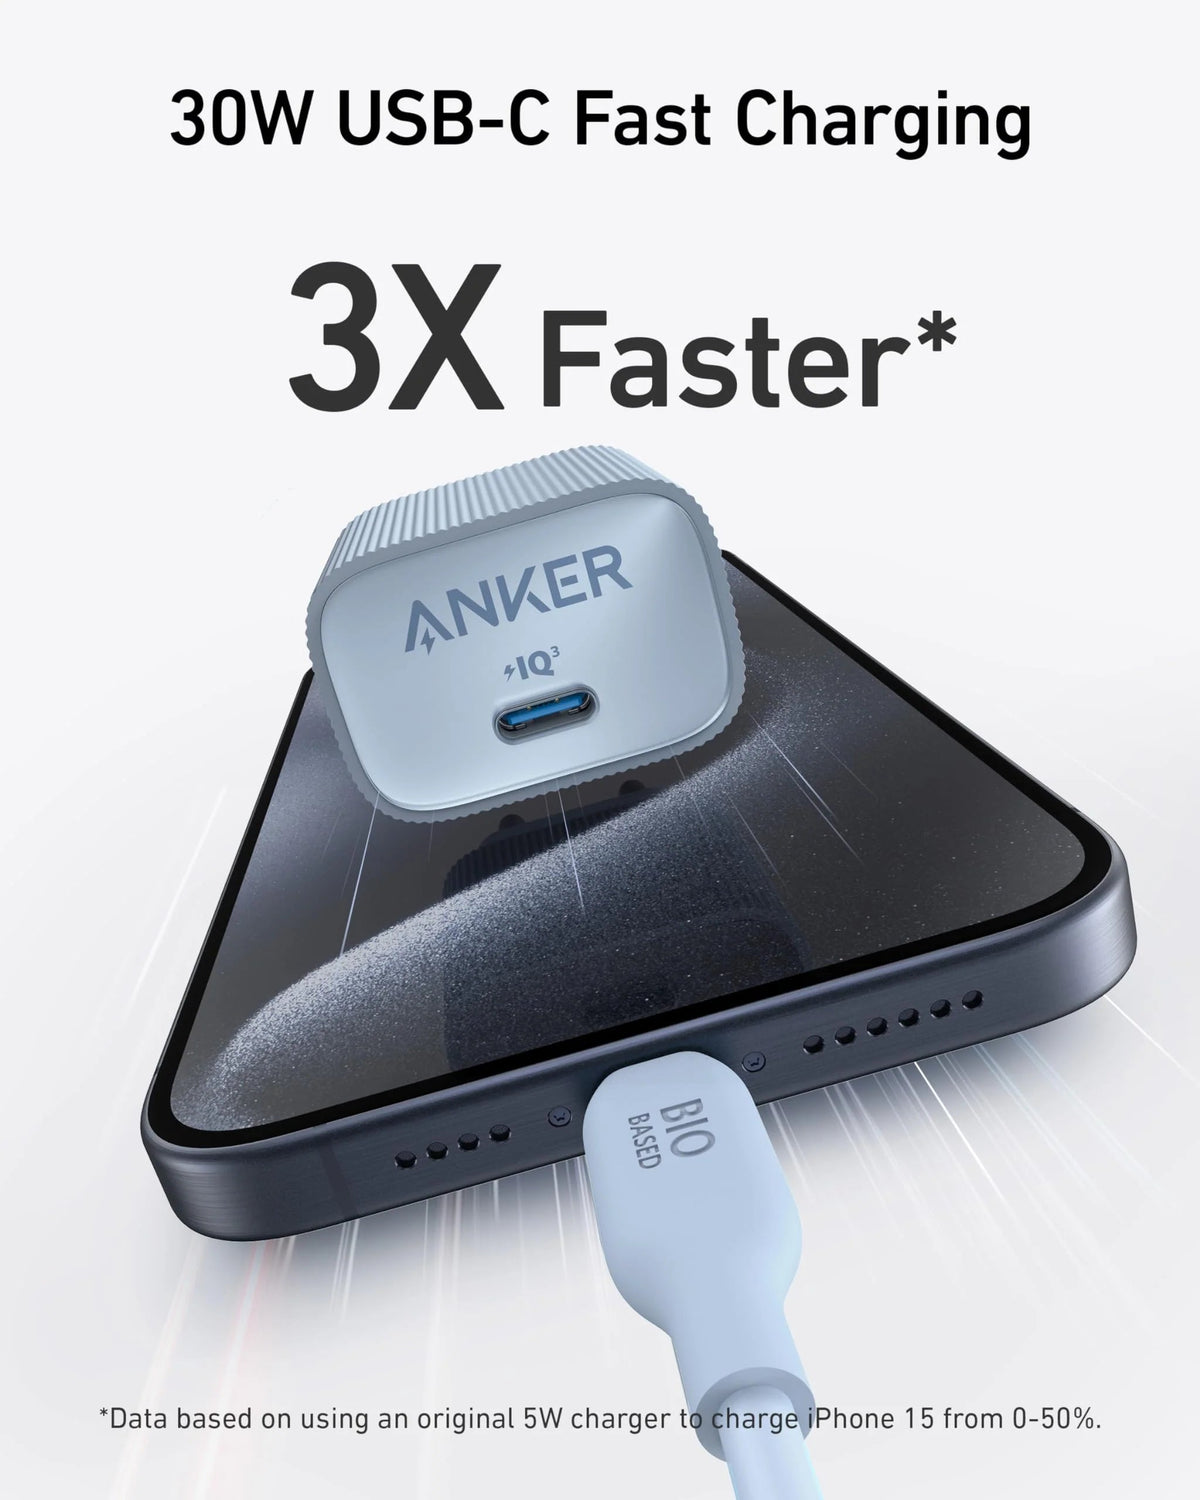 Anker Nano USB-C Wall Charger (30W)